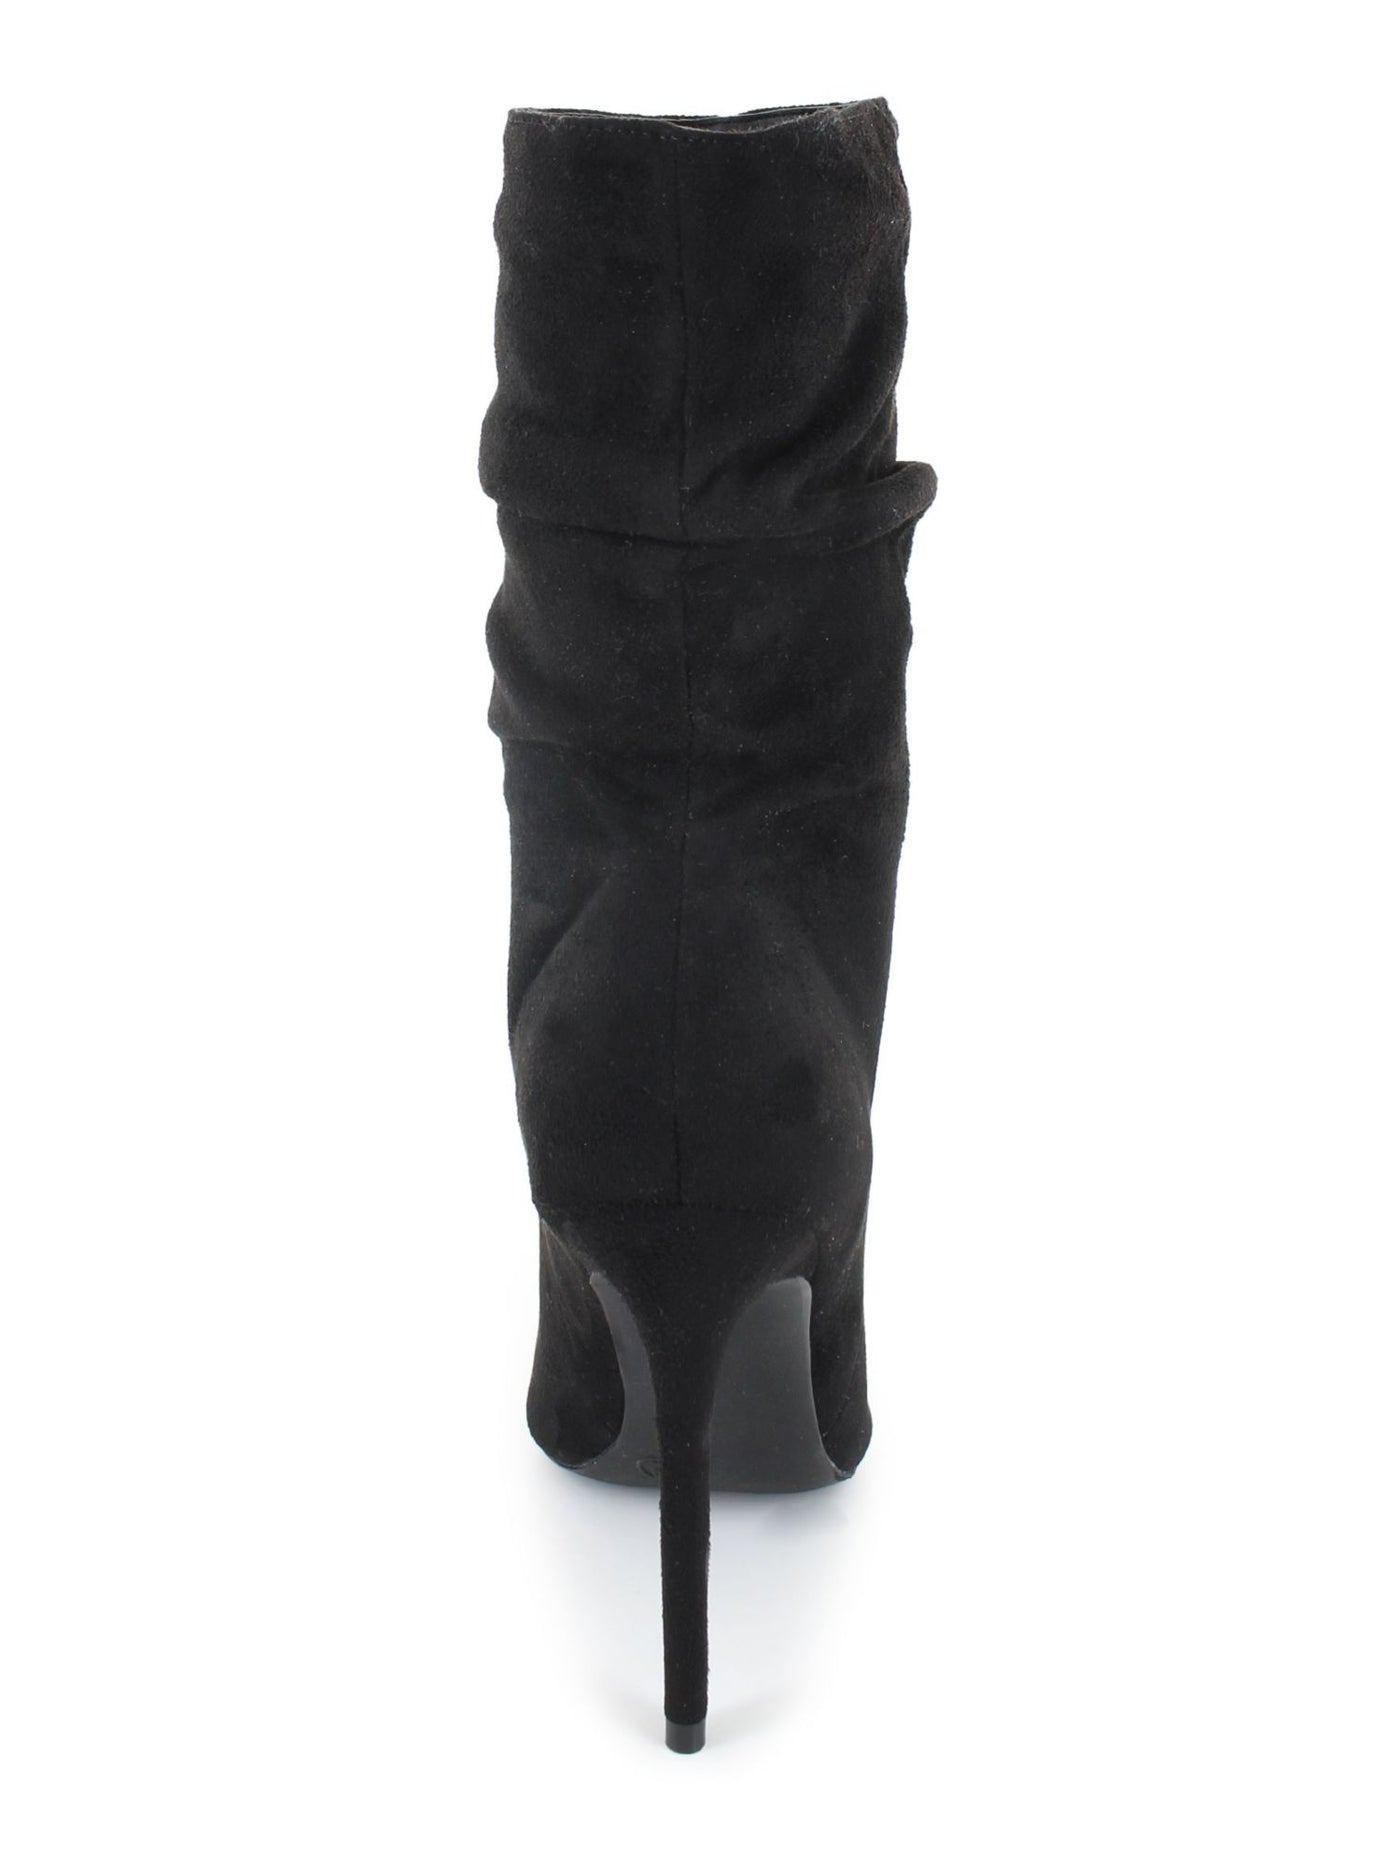 XOXO Womens Black Genevie Pointed Toe Stiletto Dress Slouch Boot 7.5